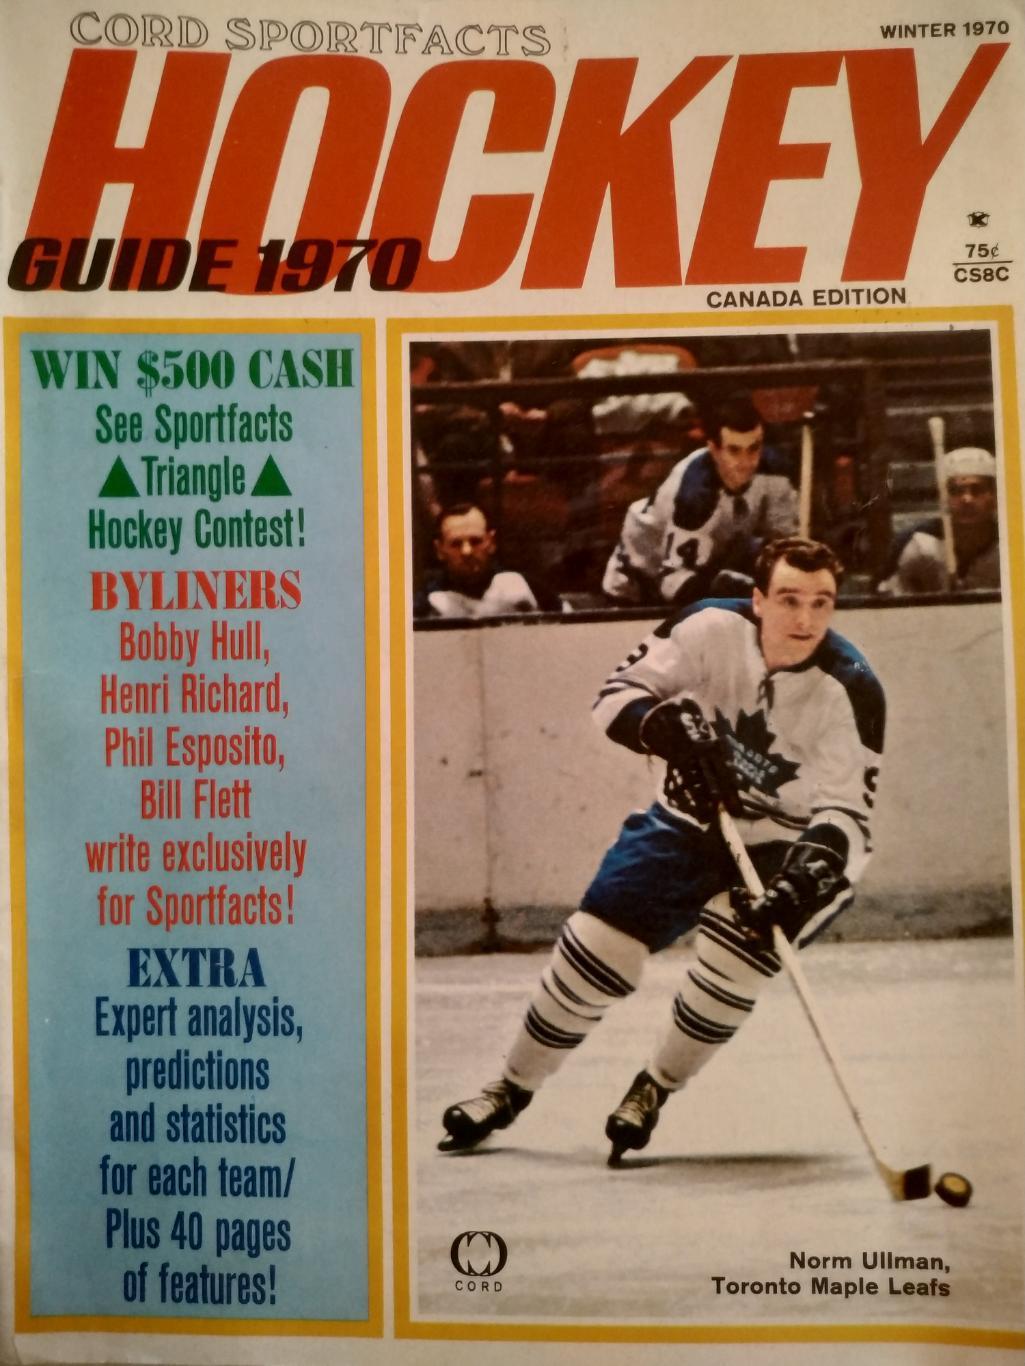 ХОККЕЙ СПРАВОЧНИК ЕЖЕГОДНИК НХЛ NHL WINTER 1970 HOCKEY GUIDE CORD SPORTFACKTS